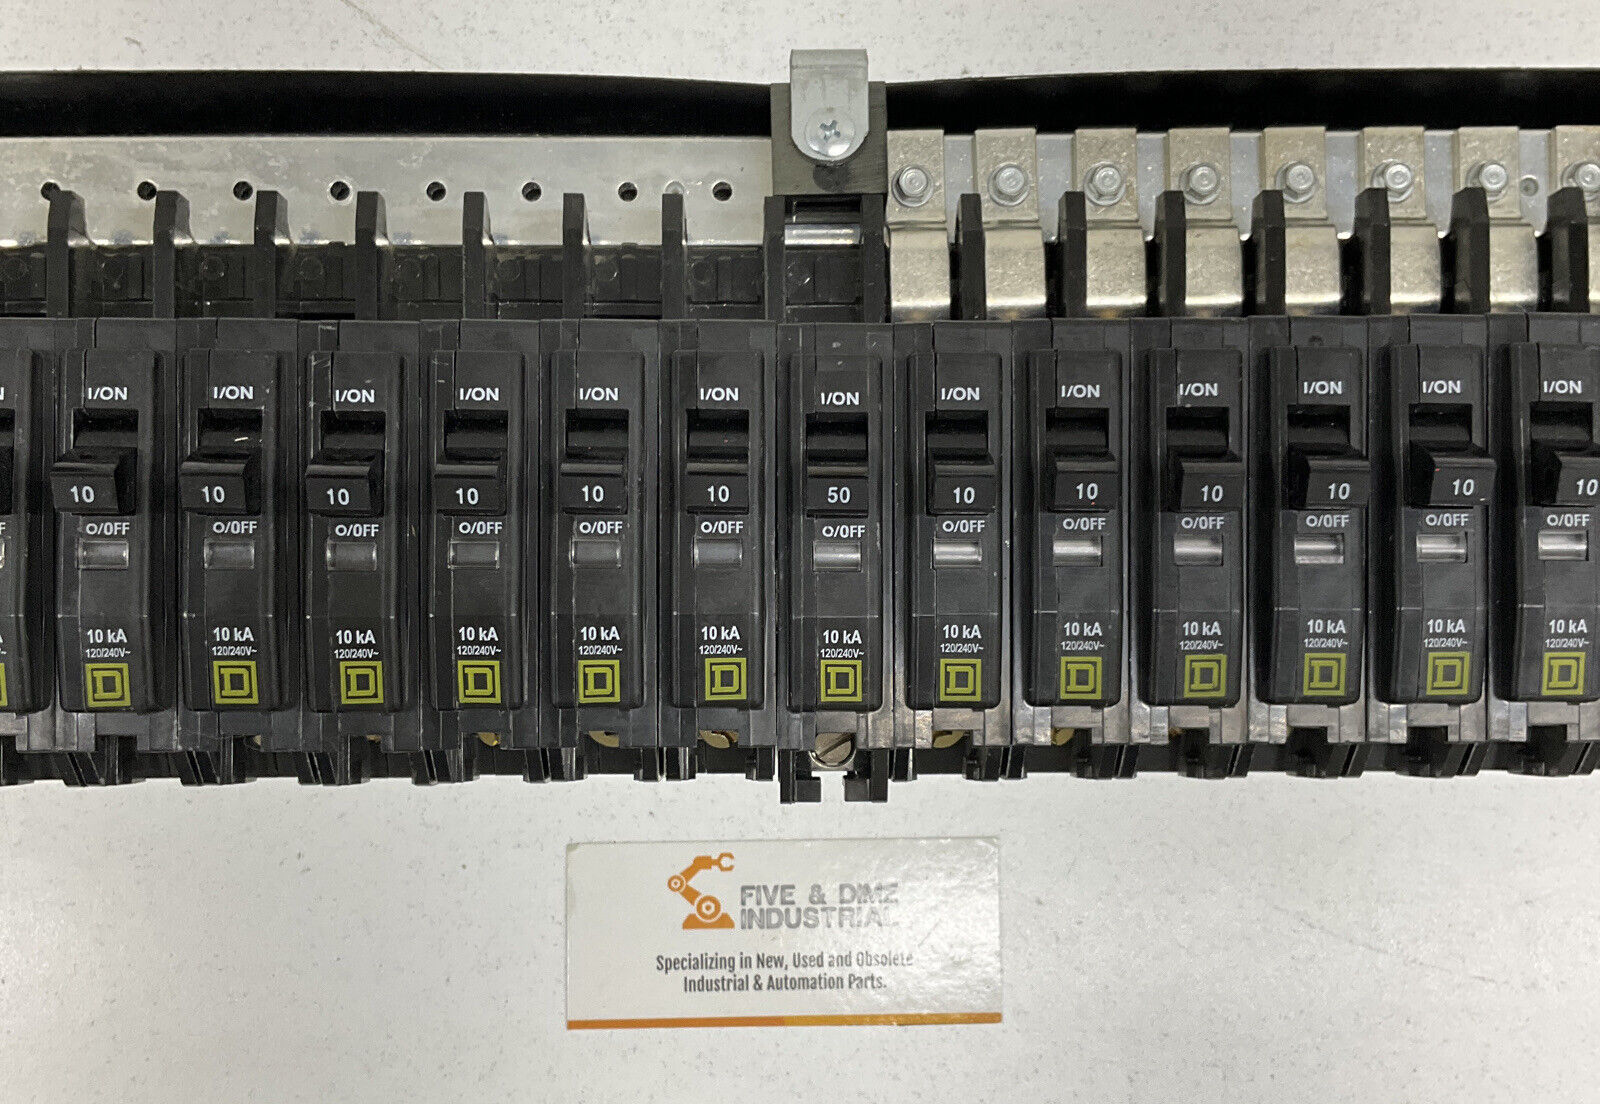 Square D NQM810M1CSB8 Panelboard  100A w/ (18) DP-4075 Circuit Breakers  OV108